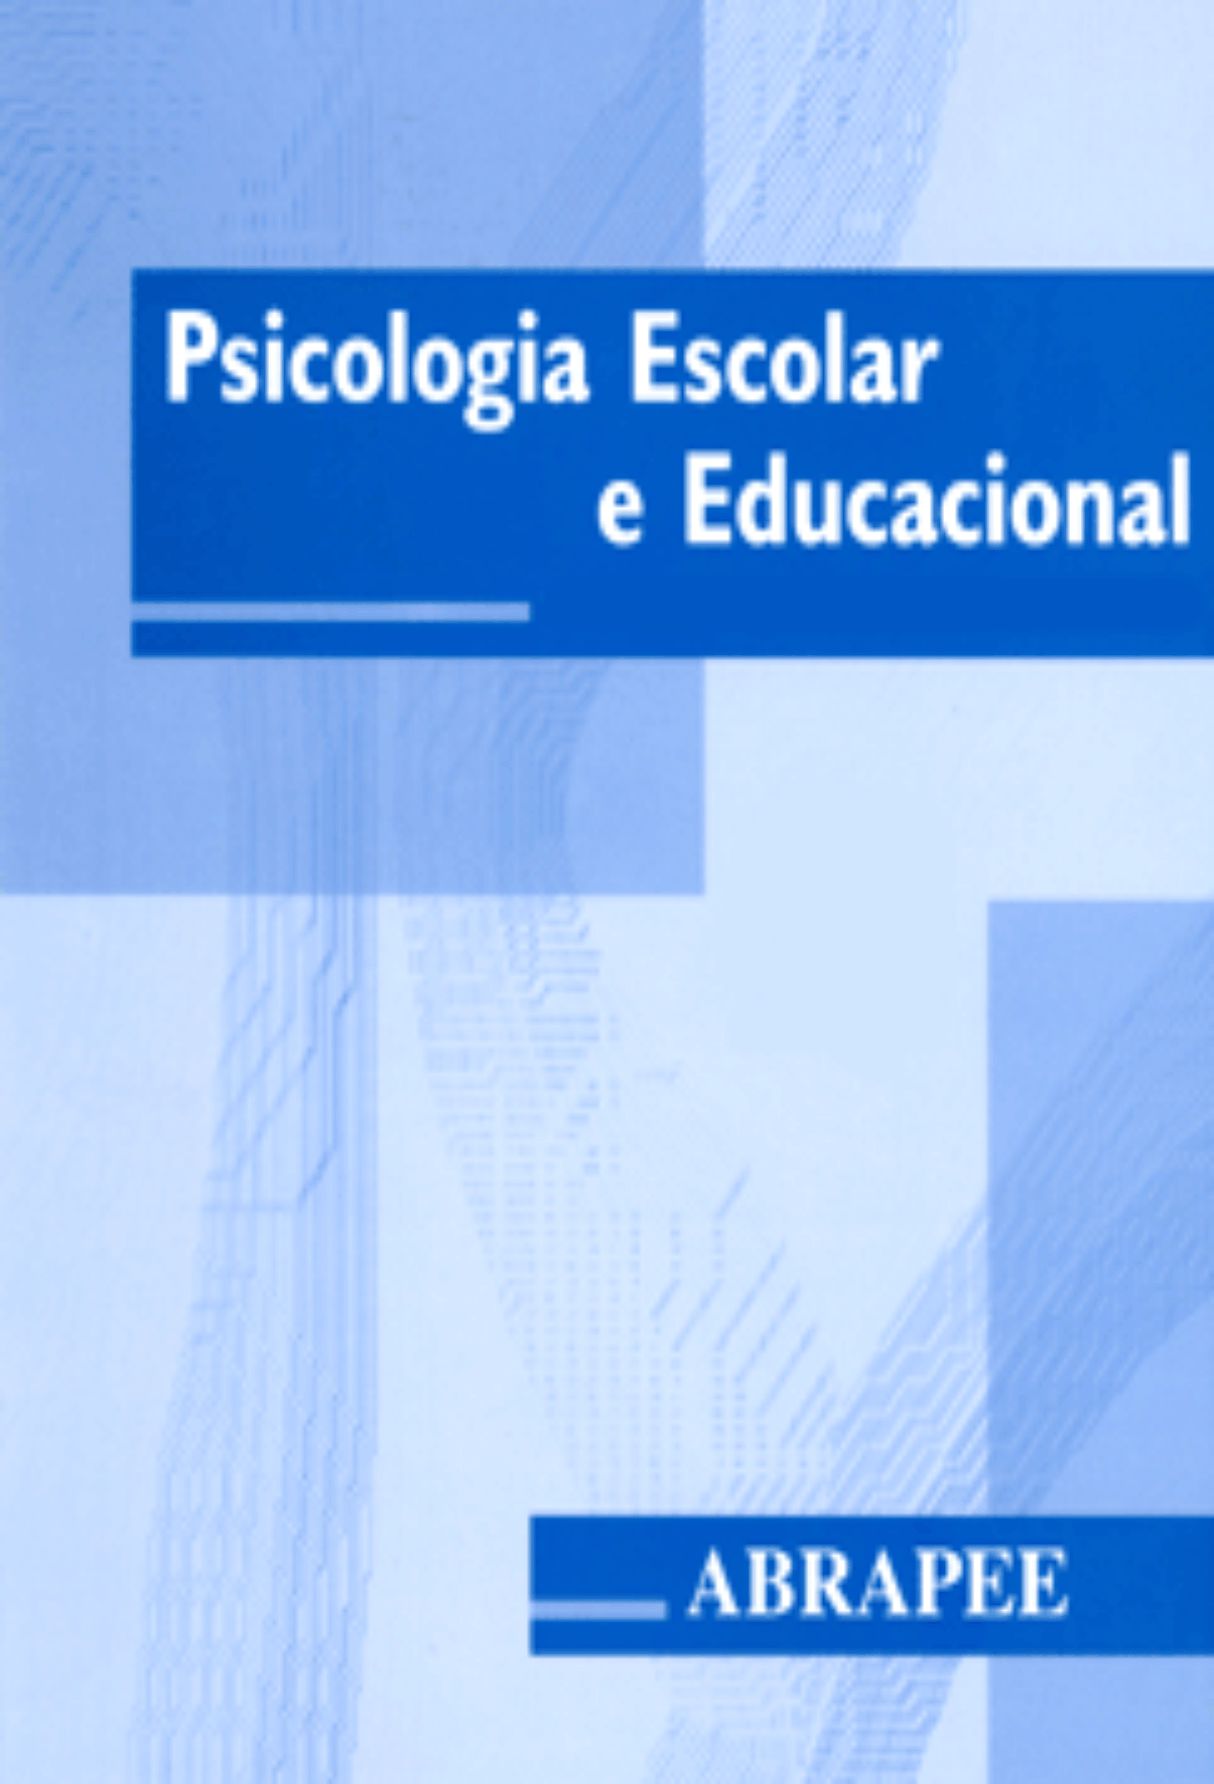 Capa: Psicologia Escolar e Educacional